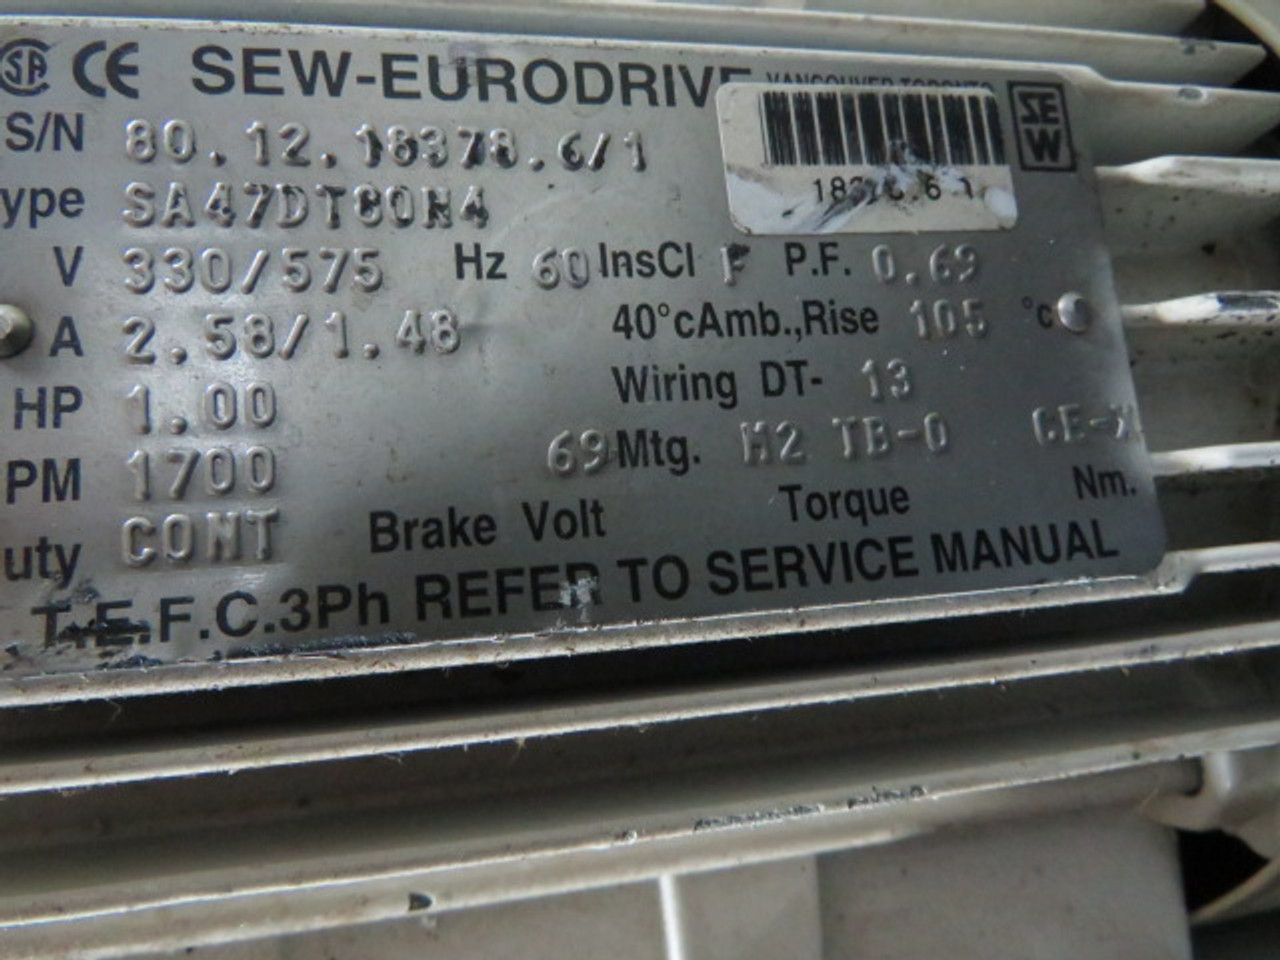 Sew-Eurodrive 1HP 1700rpm 330/575V TEFC c/w Gear Reducer 24.77:1 USED